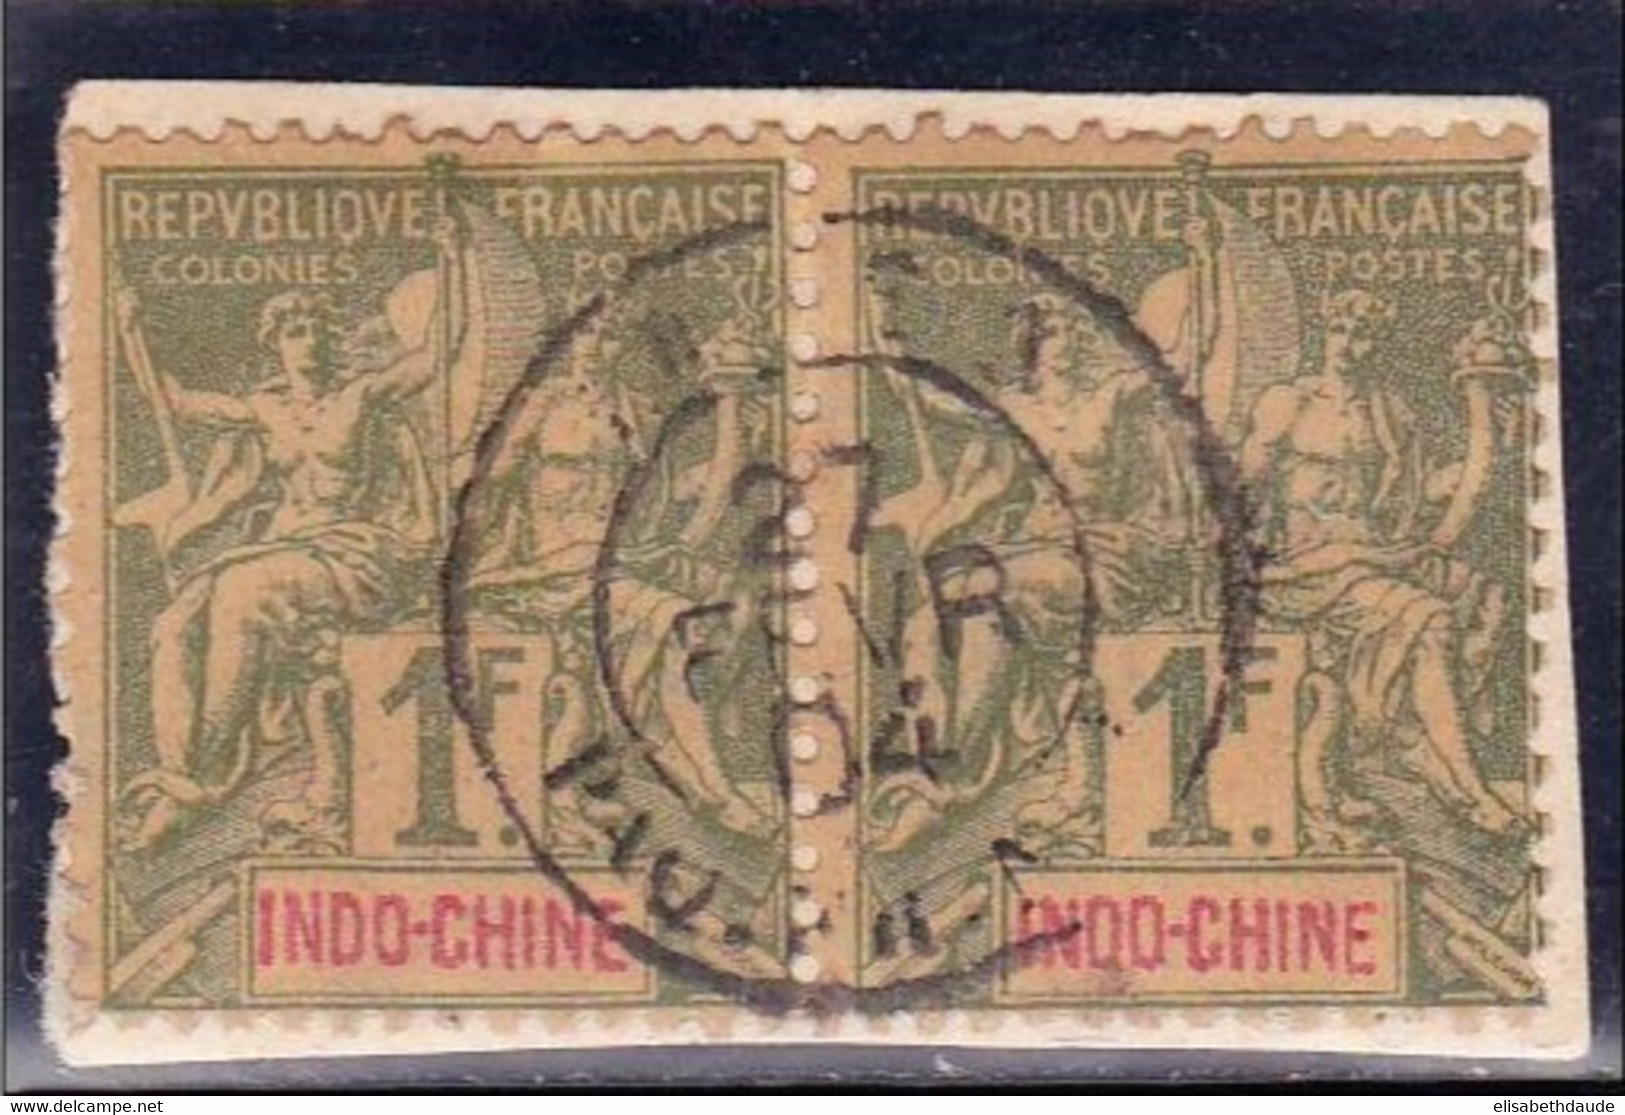 INDOCHINE - YVERT N° 15 OBLITERATION PAQUEBOT EN PAIRE SUR FRAGMENT - COTE = 96++ EUR. - - Used Stamps